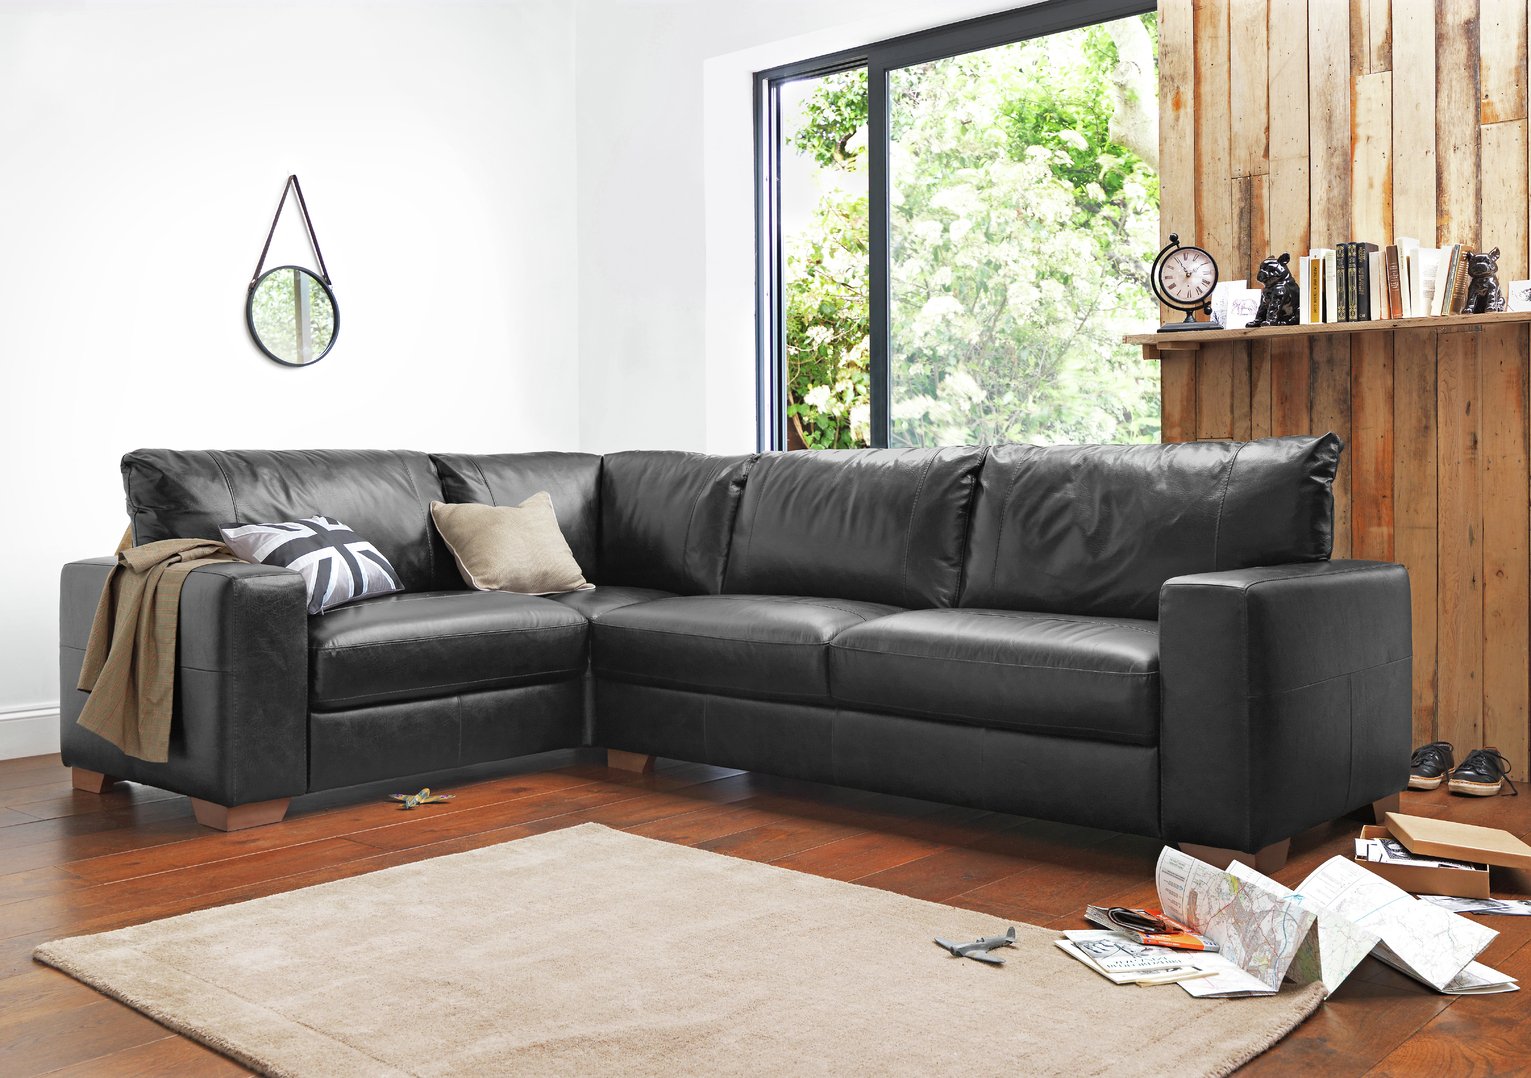 Argos Home Eton Right Corner Leather Sofa - Dark Brown